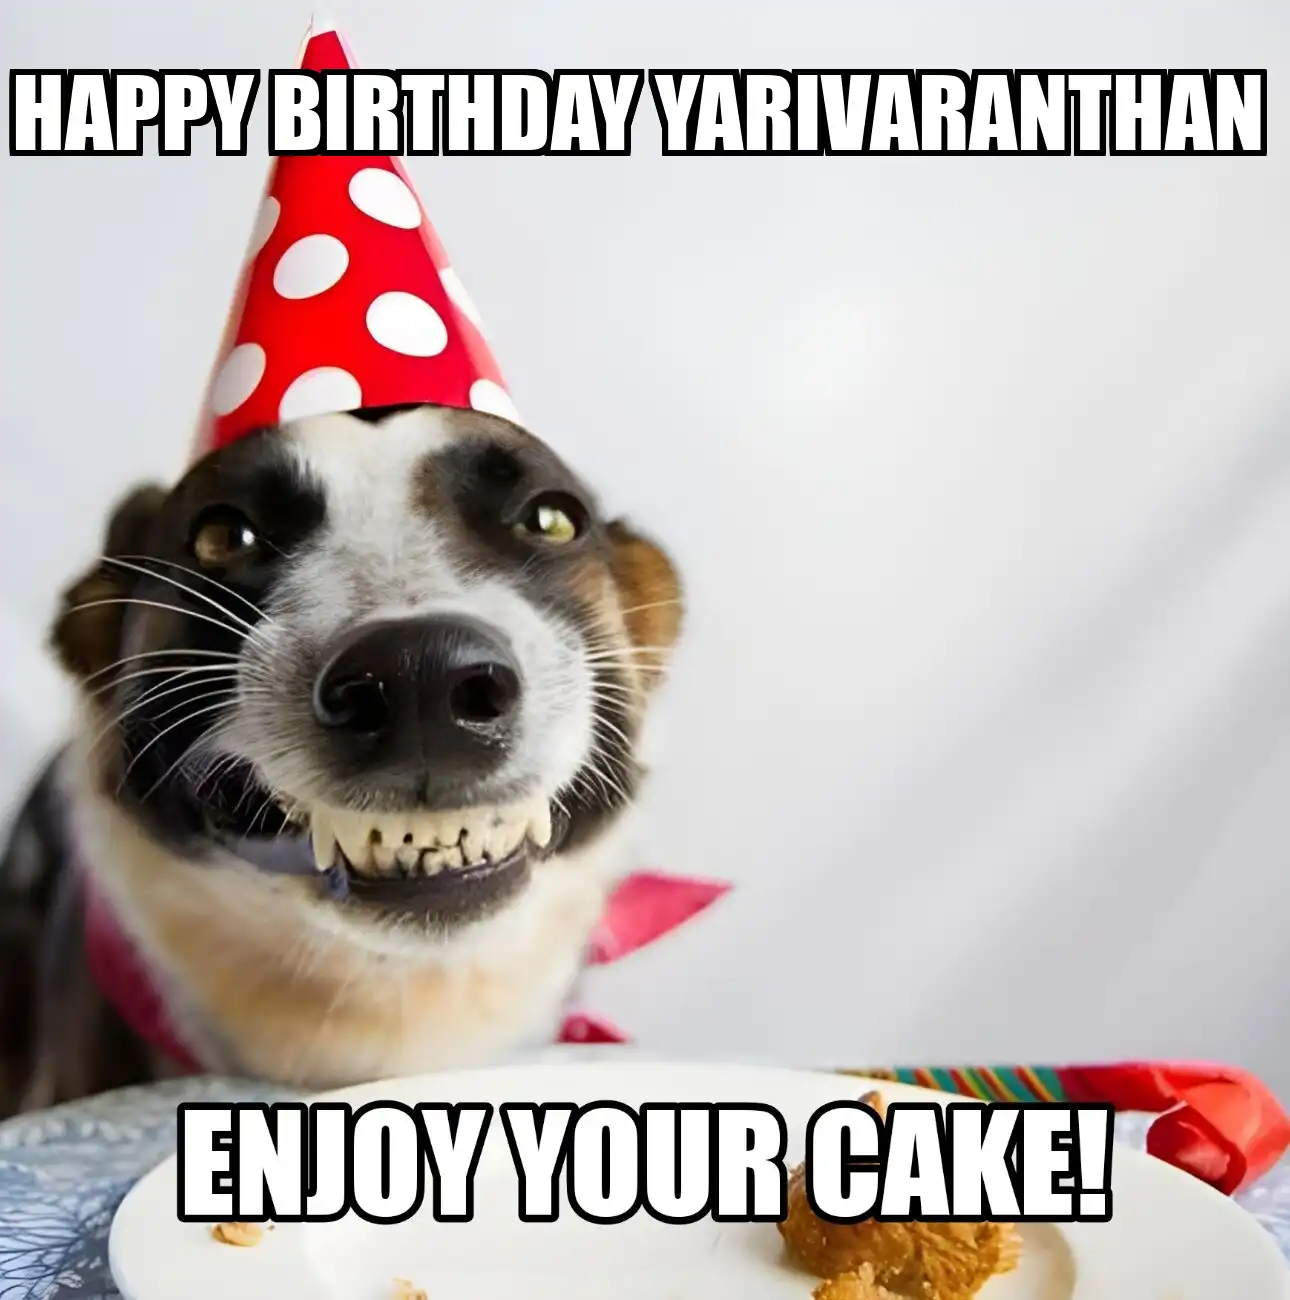 Happy Birthday Yarivaranthan Enjoy Your Cake Dog Meme